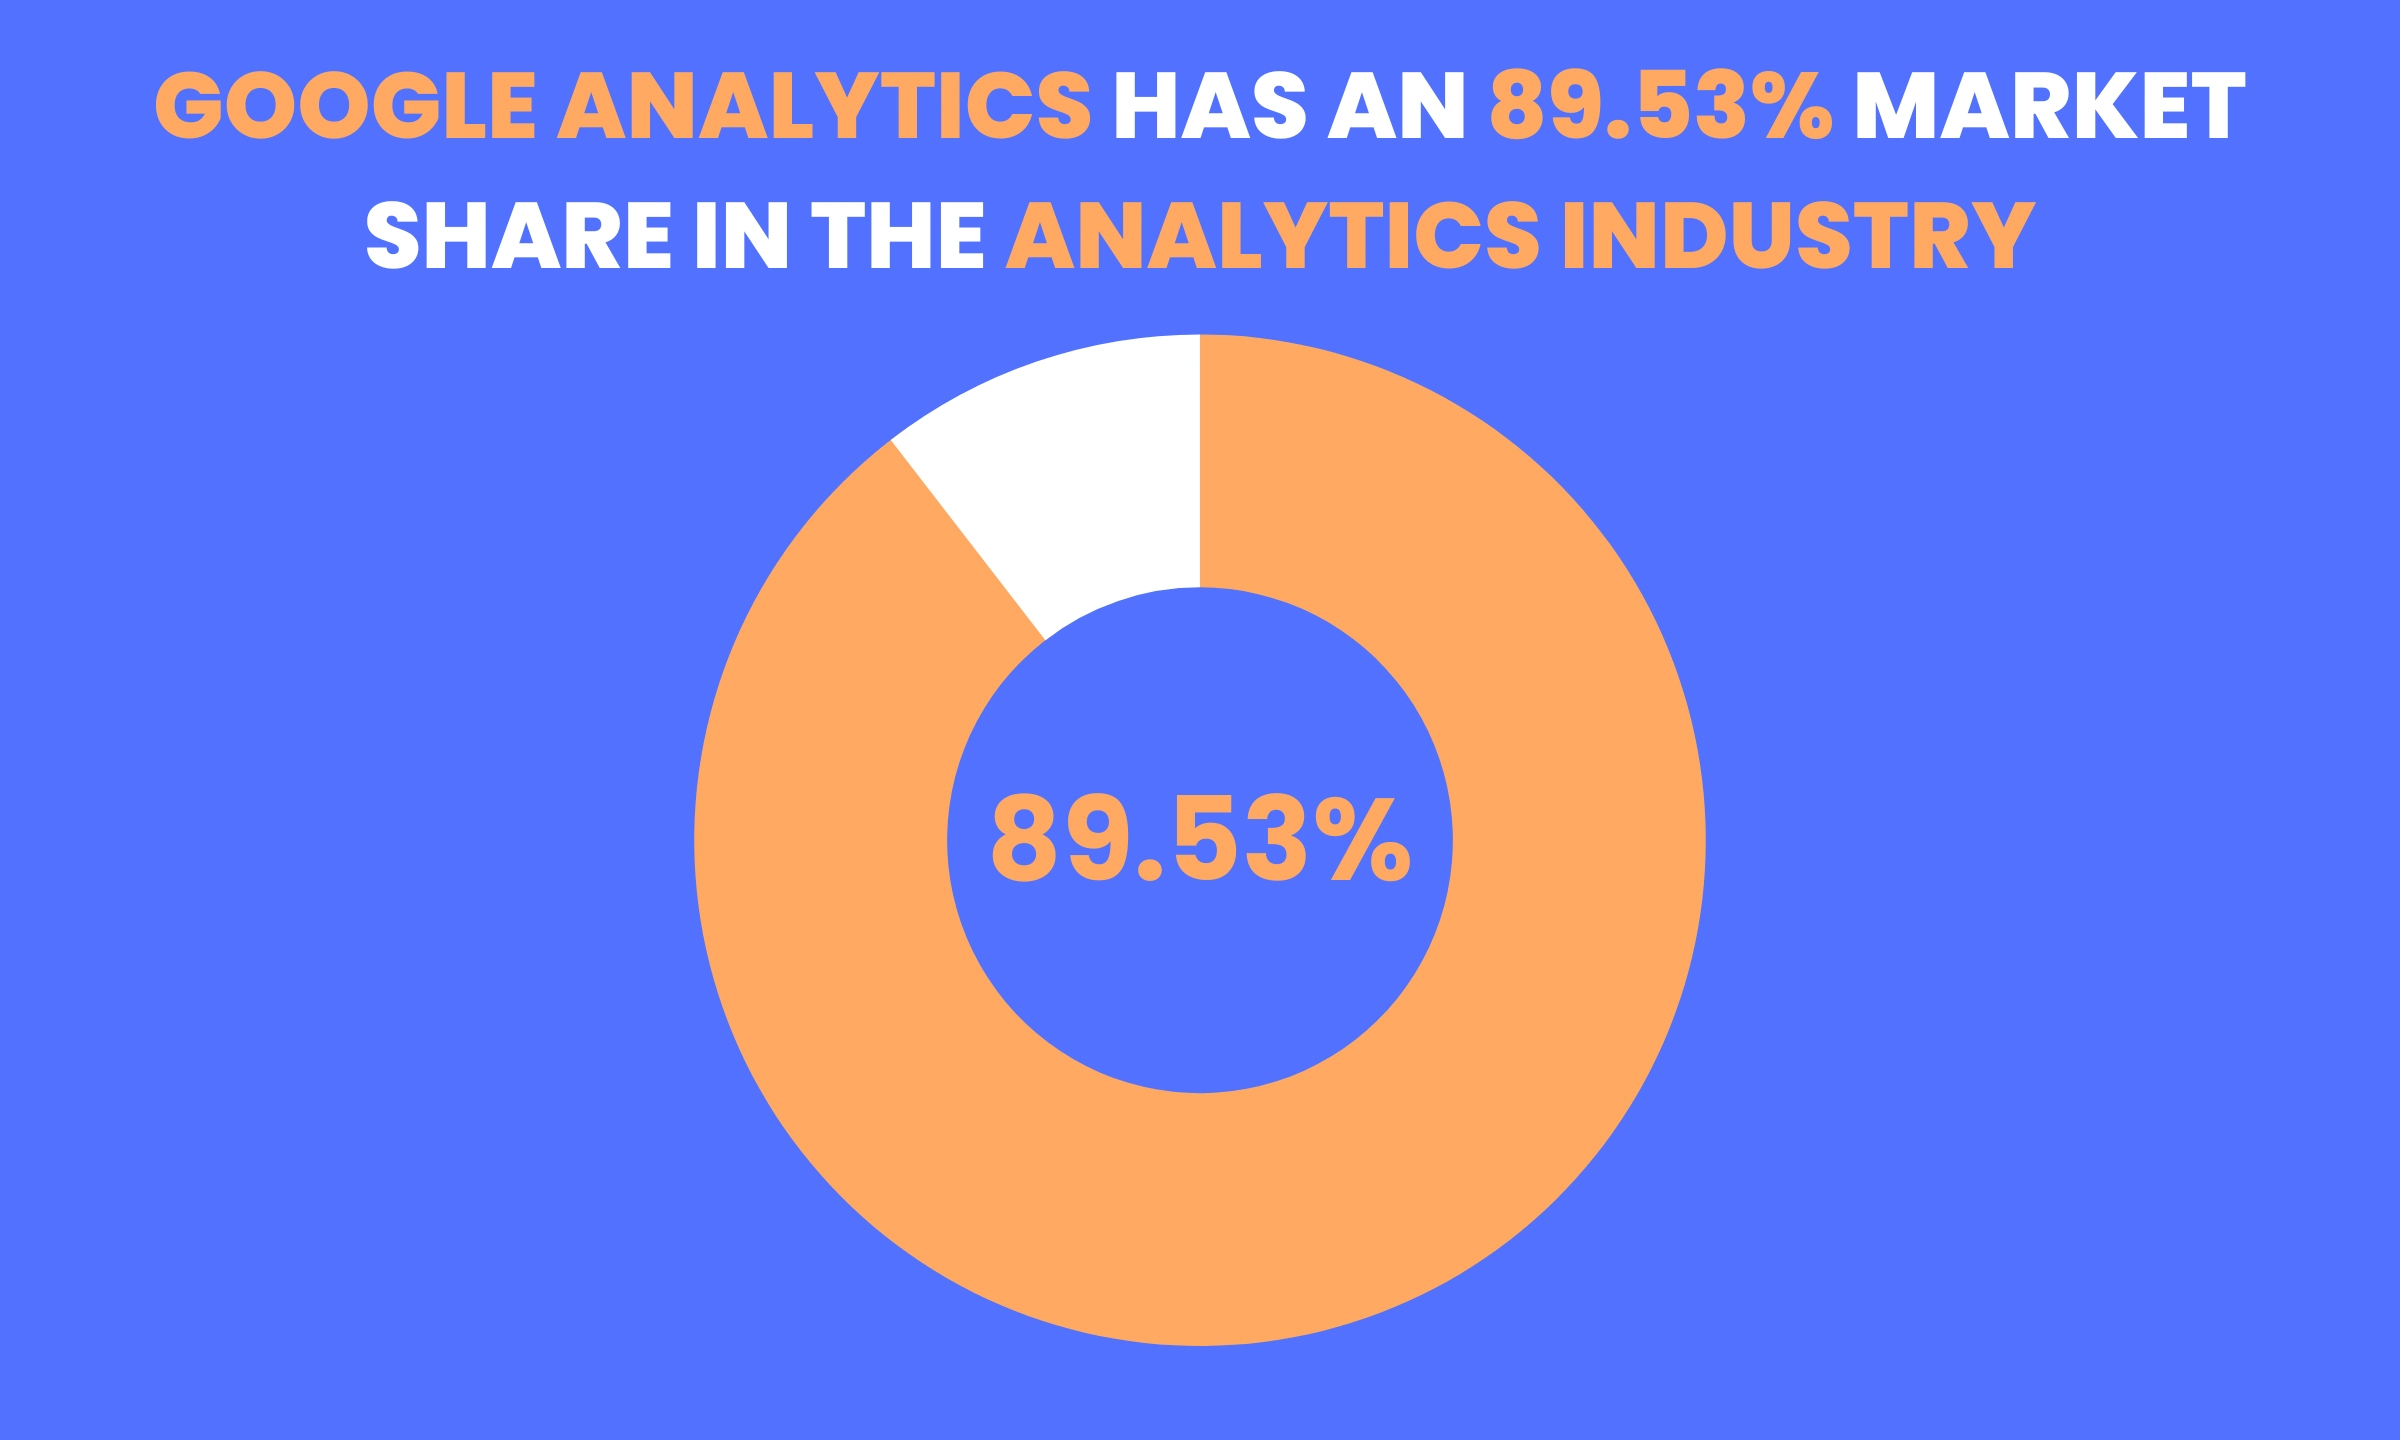 Google Analytics 89.53% market share in the analytics industry